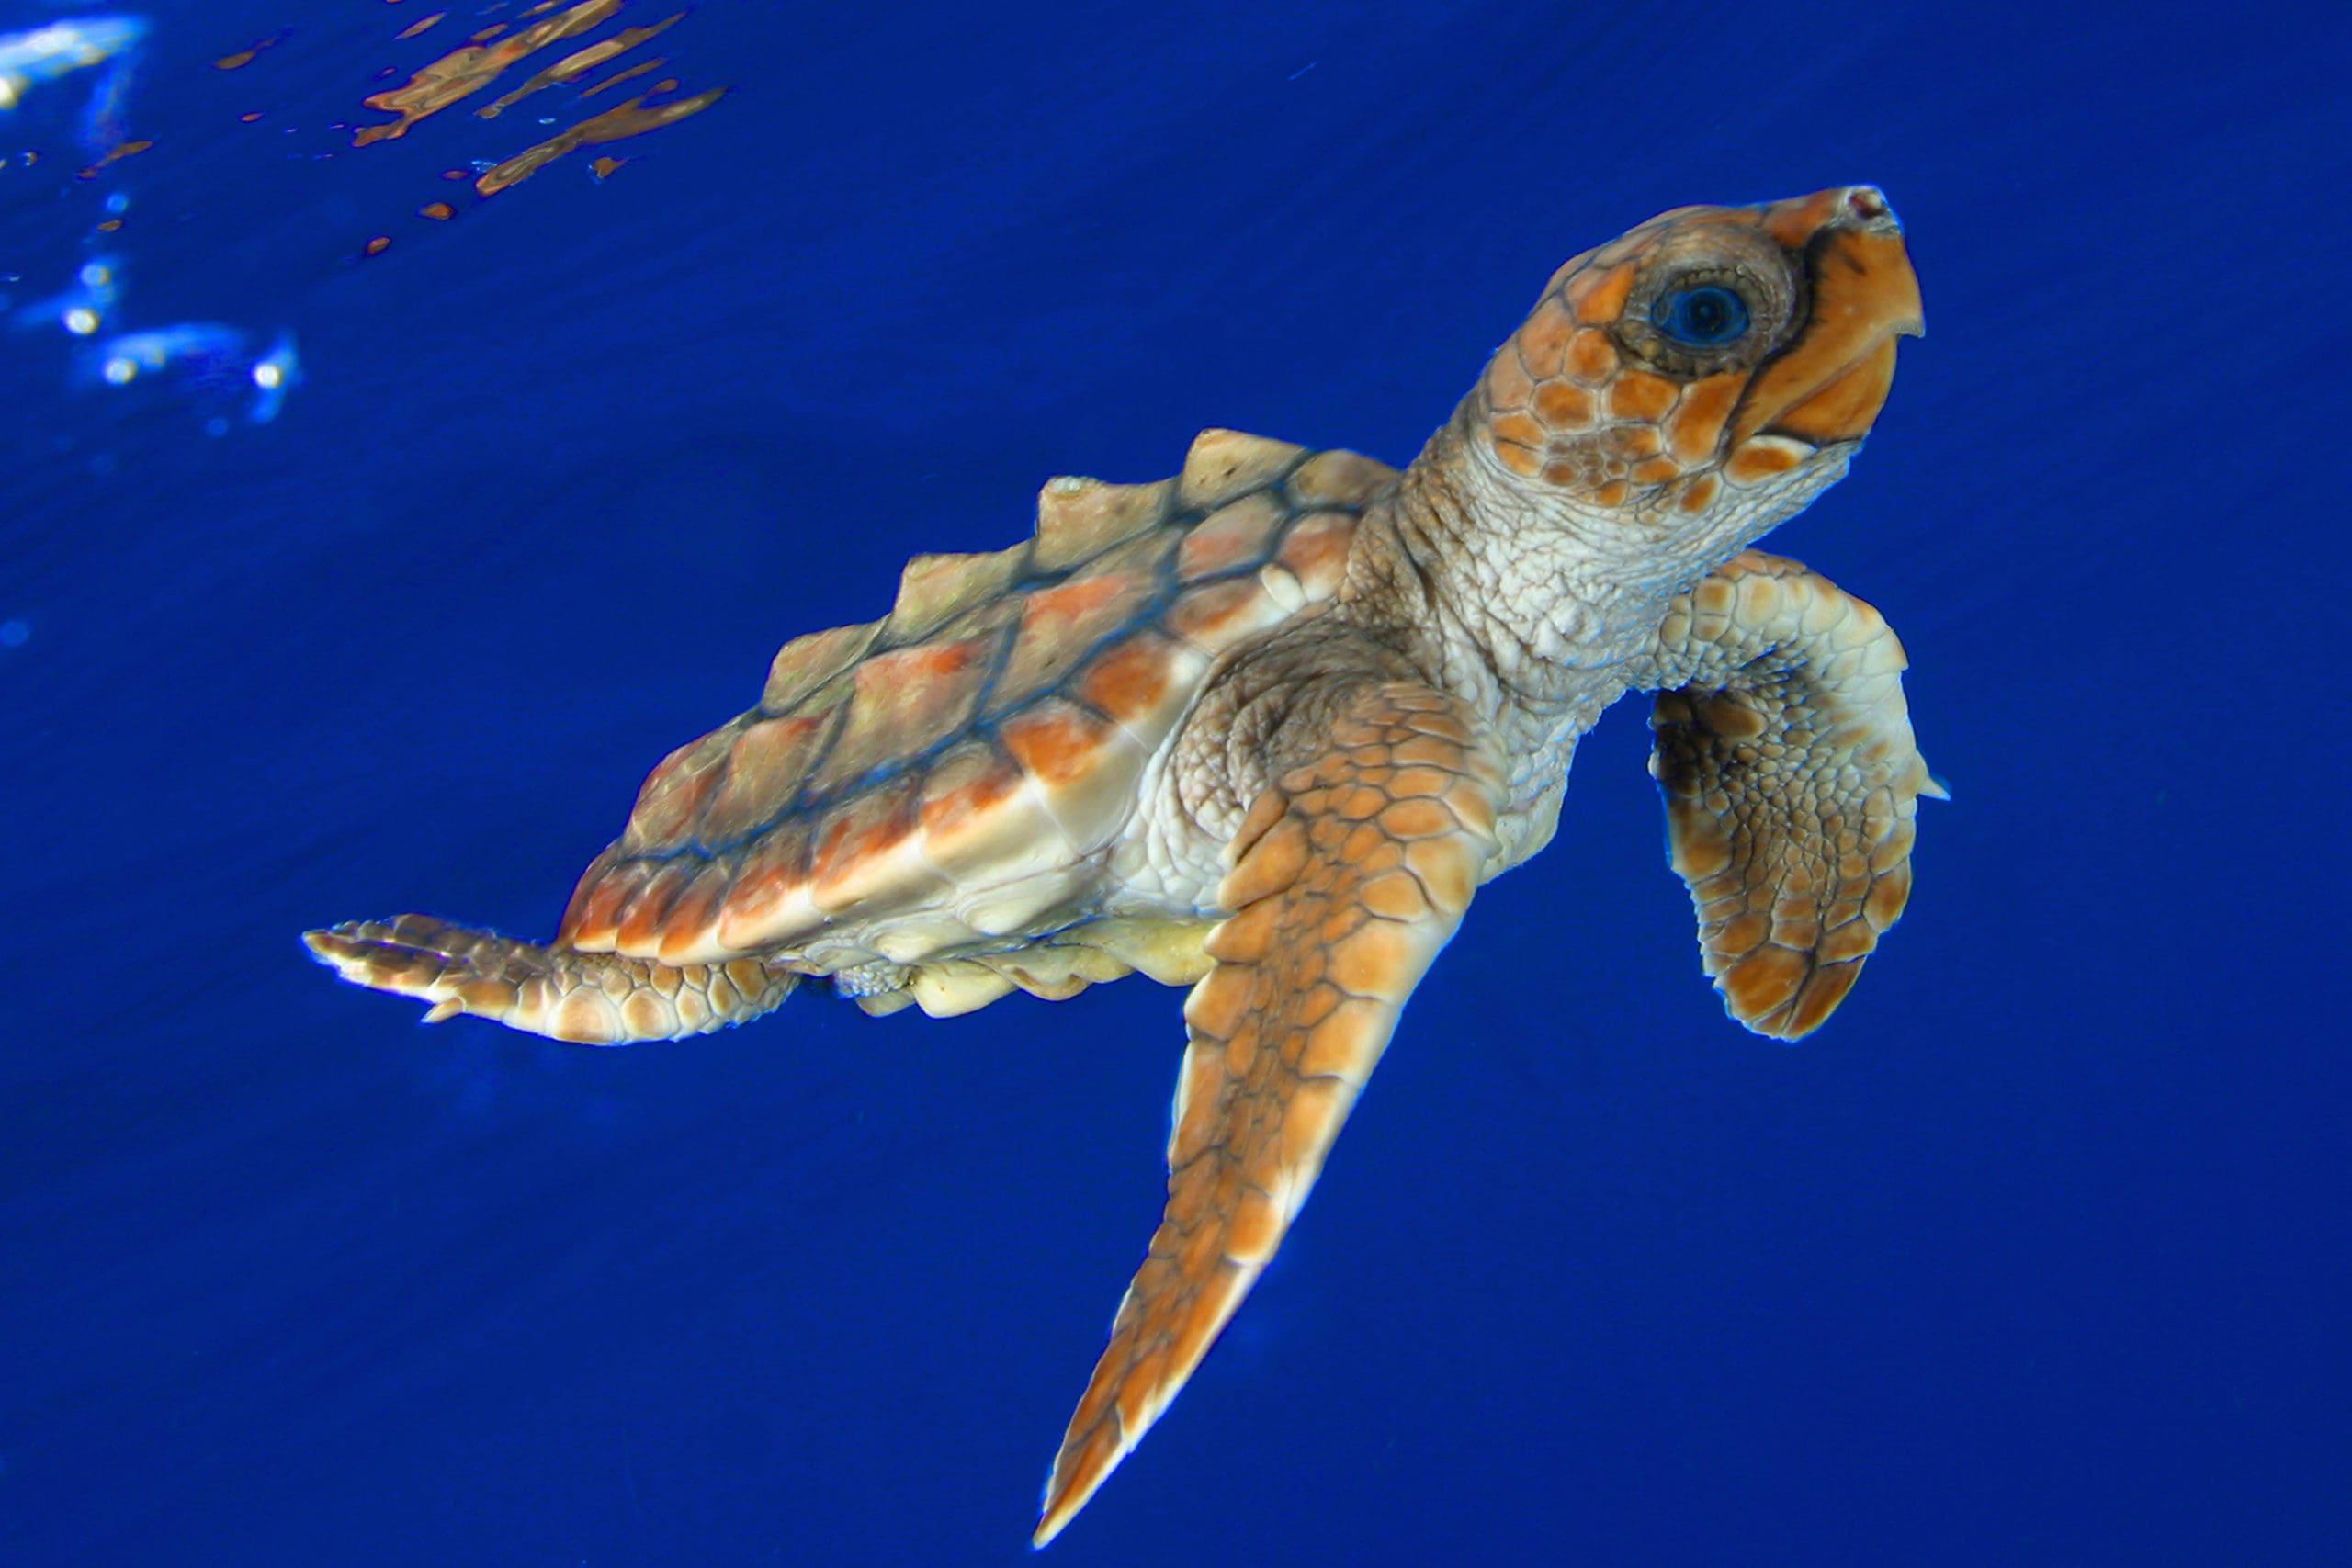 JDW00978: Loggerhead Turtle Hatchling © James Watt / imagequestmarine.com